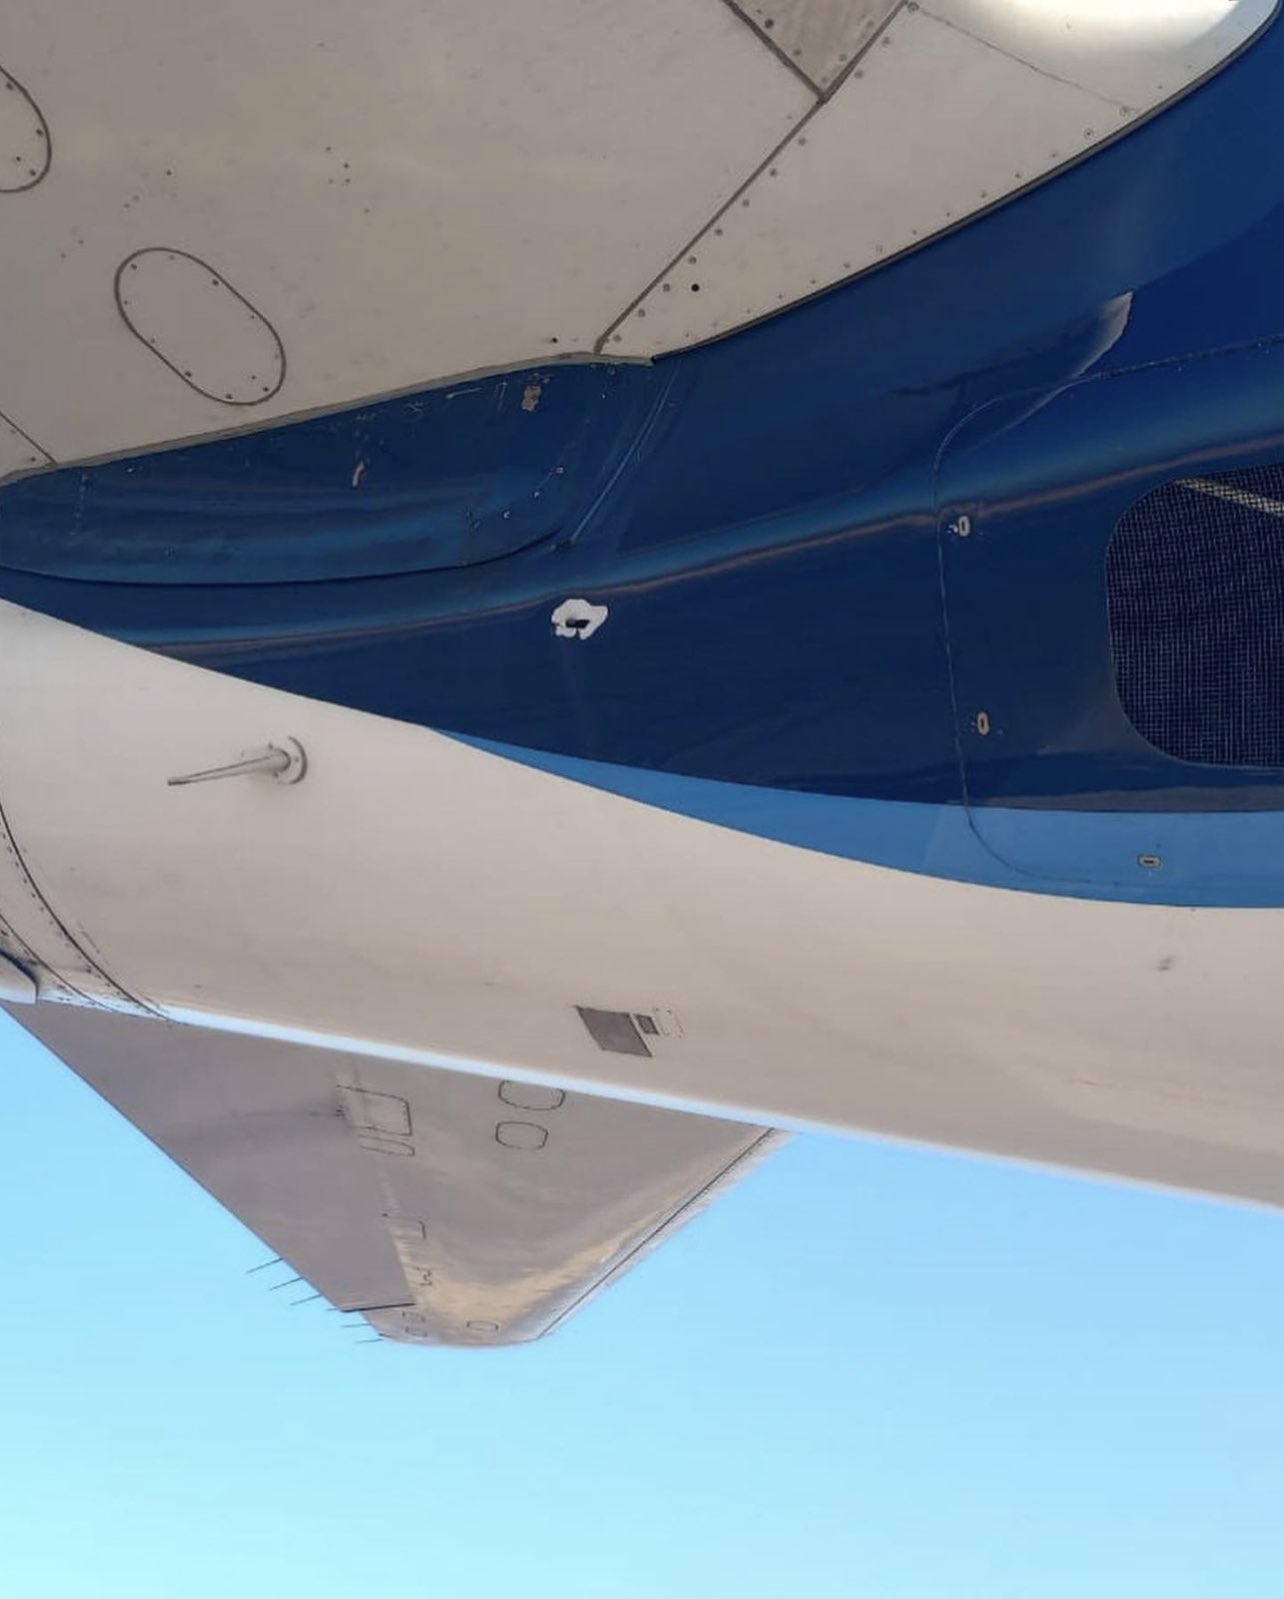 AeroMexico   Flight  AM165   Passengers  Took  Cover as  Gunshots  Pierce  The  Embraer ERJ-190LR  Aircraft  Fuselage .